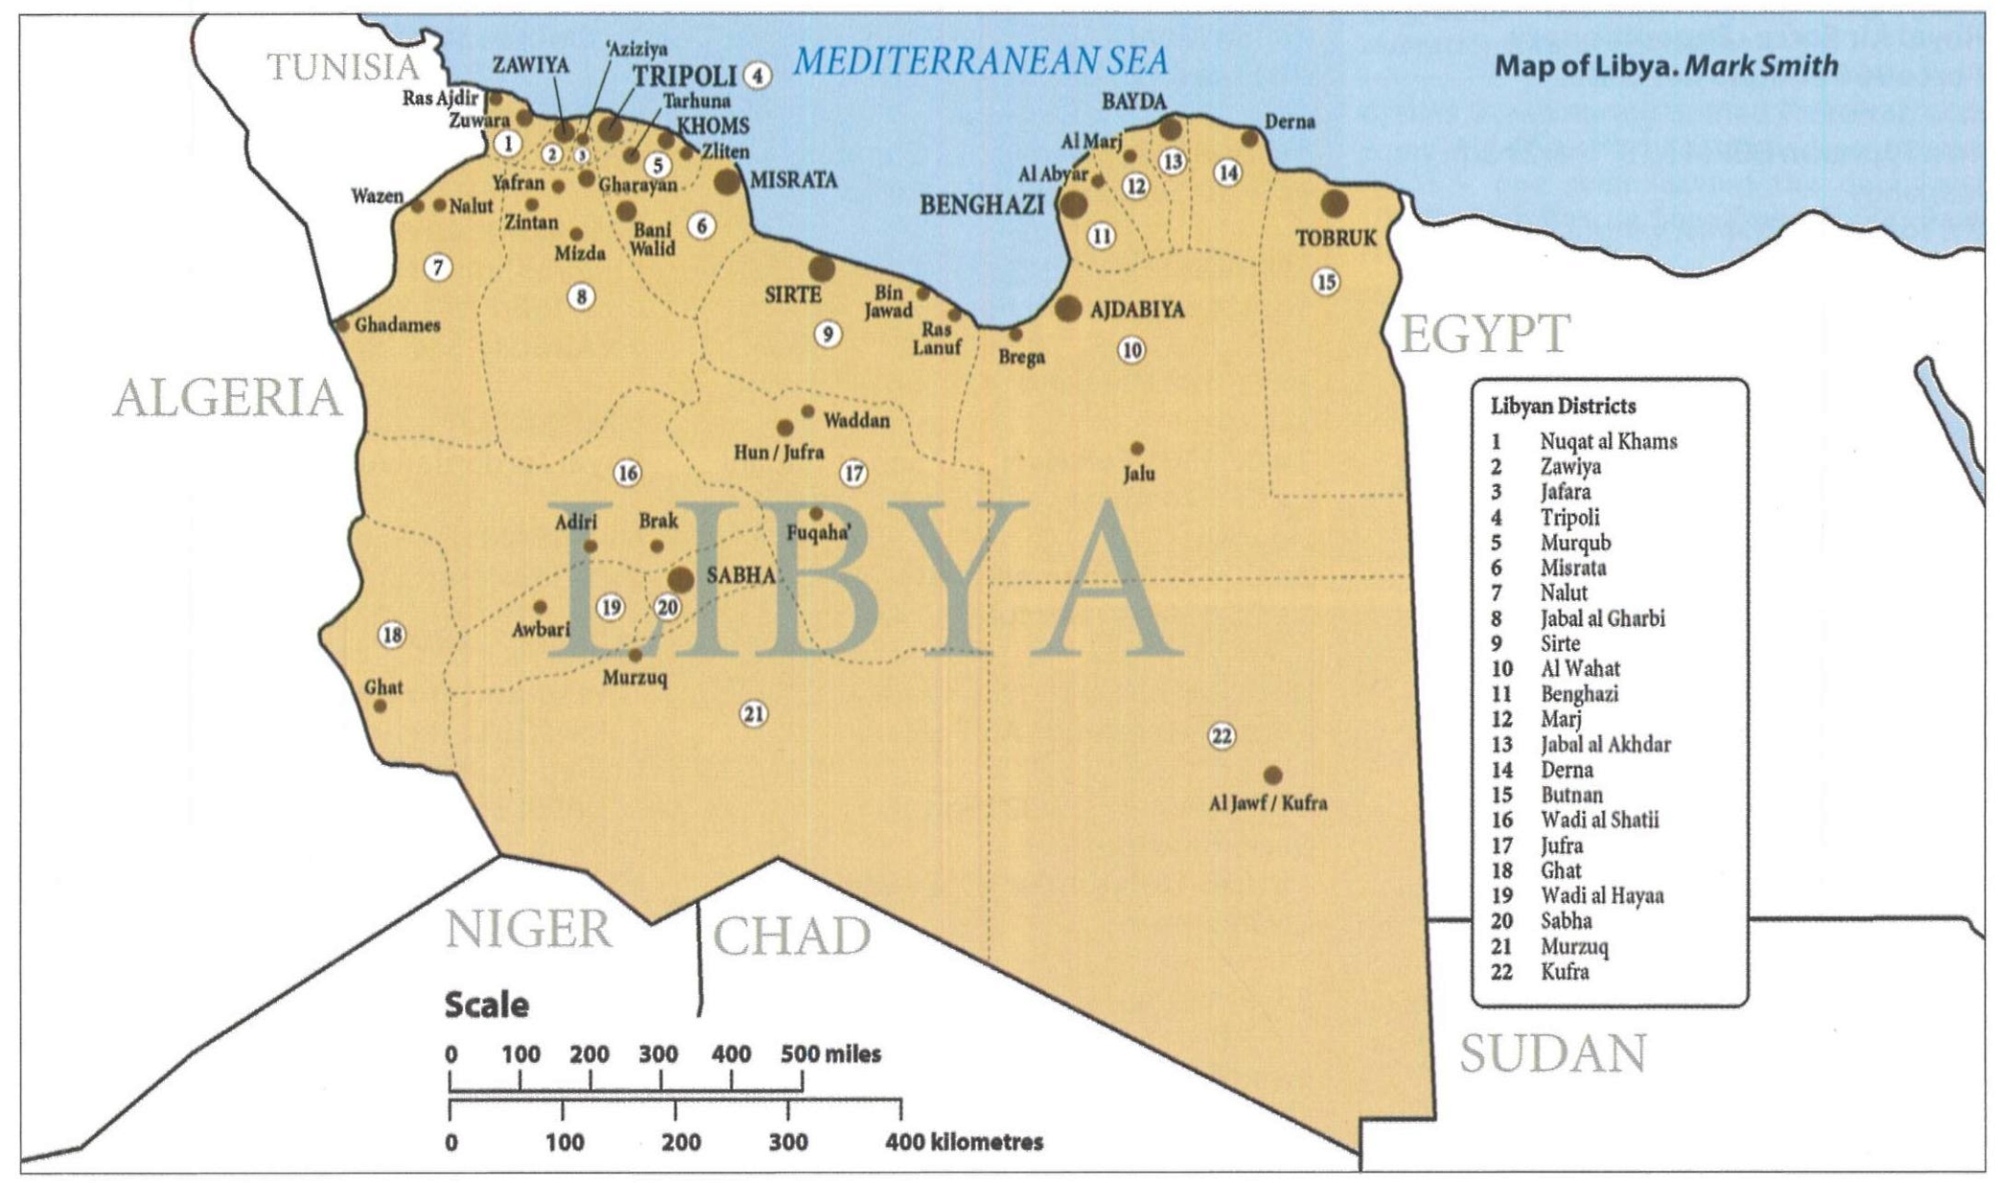 1706494033 570 NATO Libyan Campaign Review II